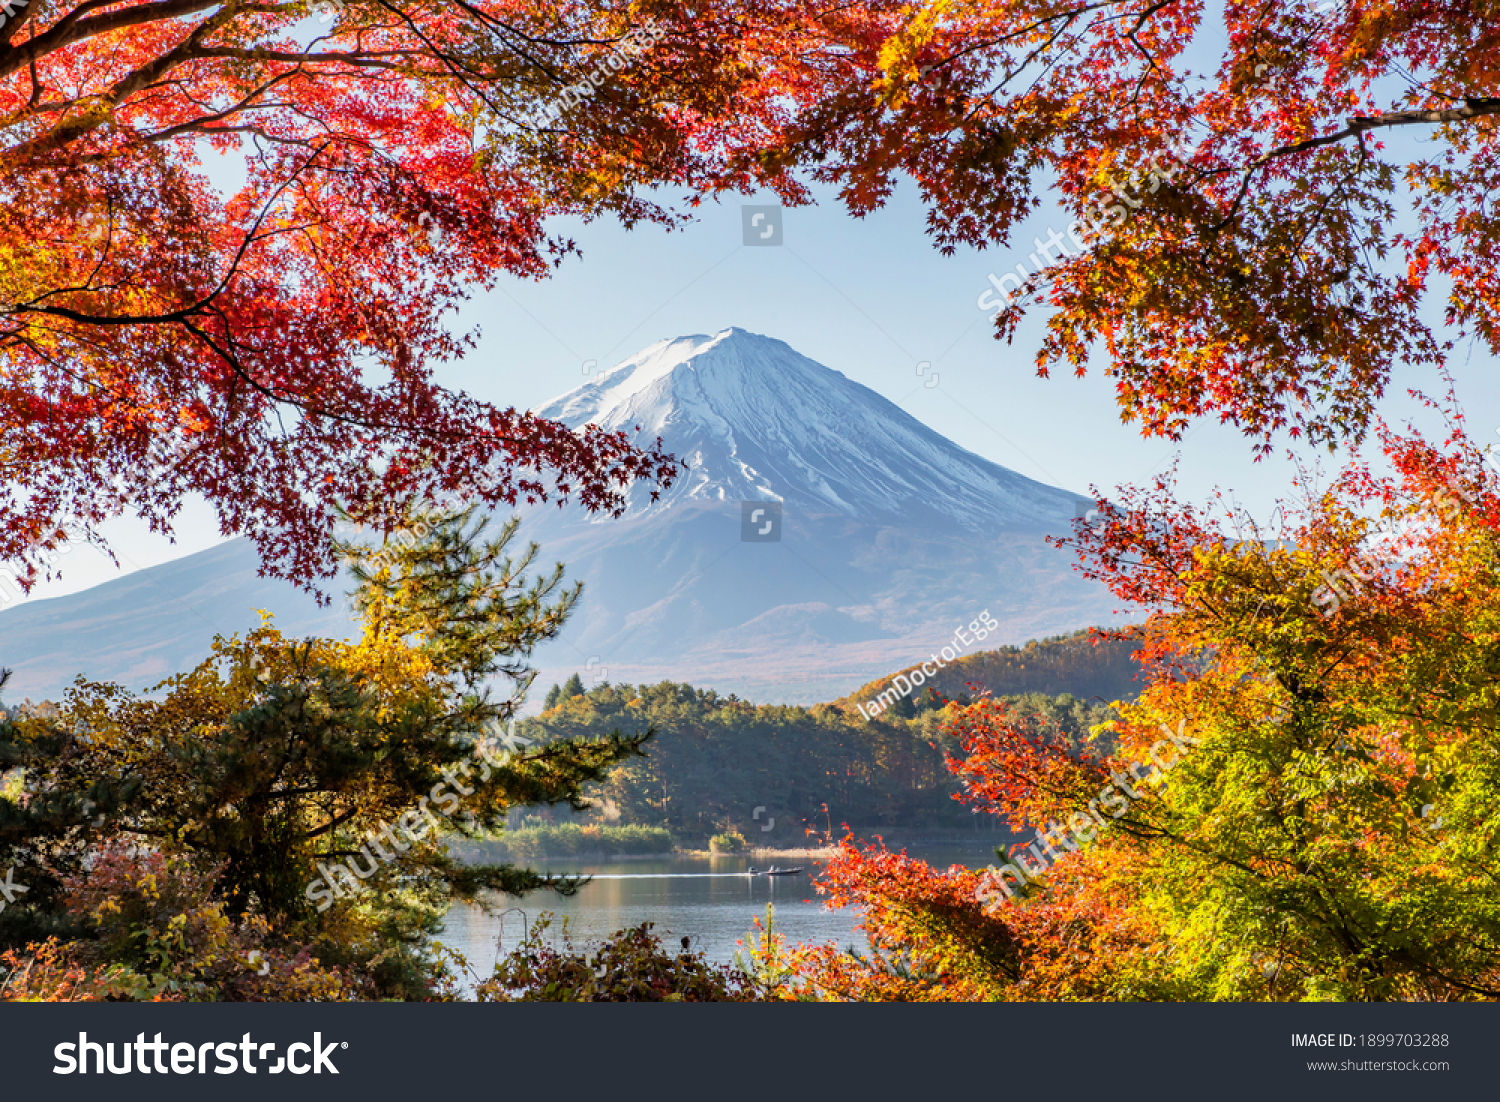 Fuji Mountain and Red Maple Leaves in Autumn at Kawaguchiko Lake, Japan #1899703288